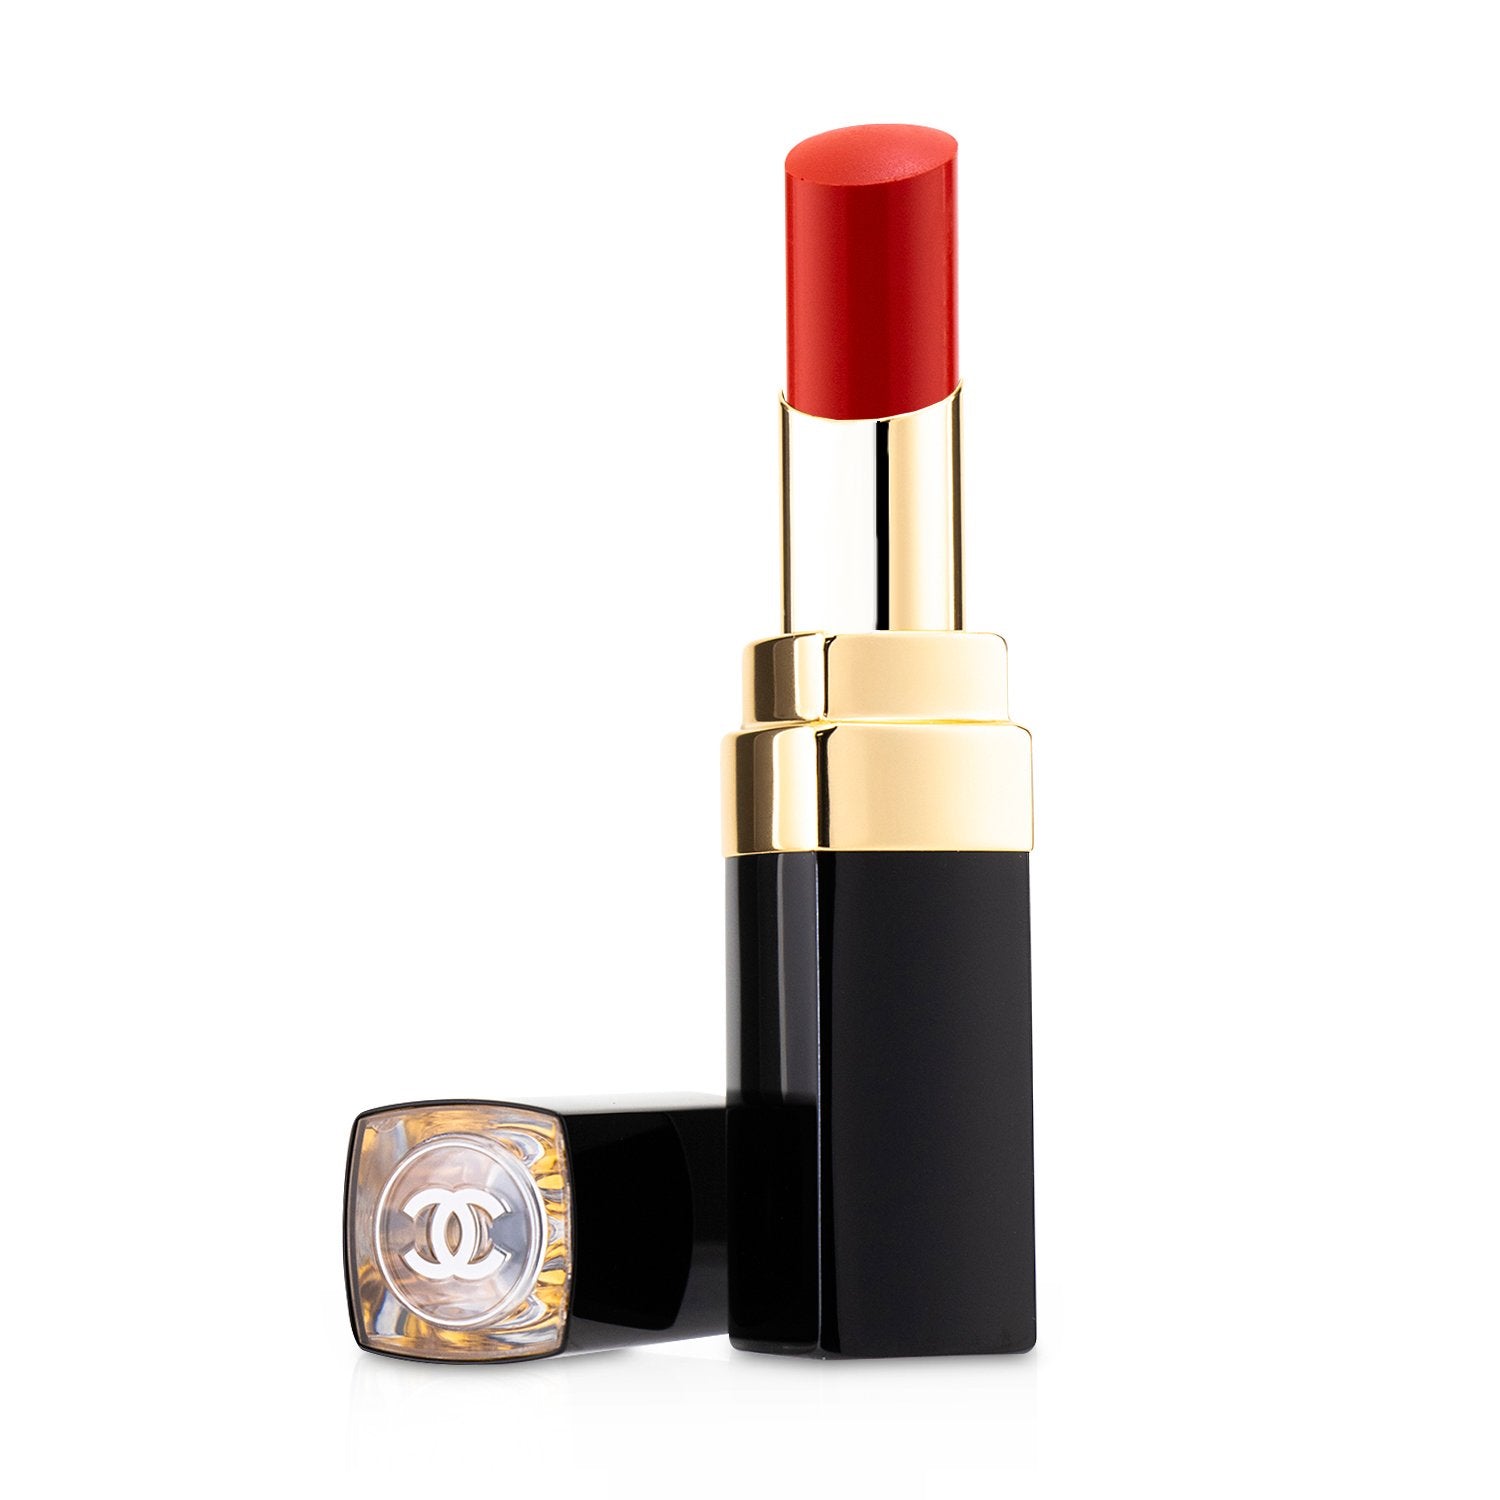 chanel lipstick lust 134